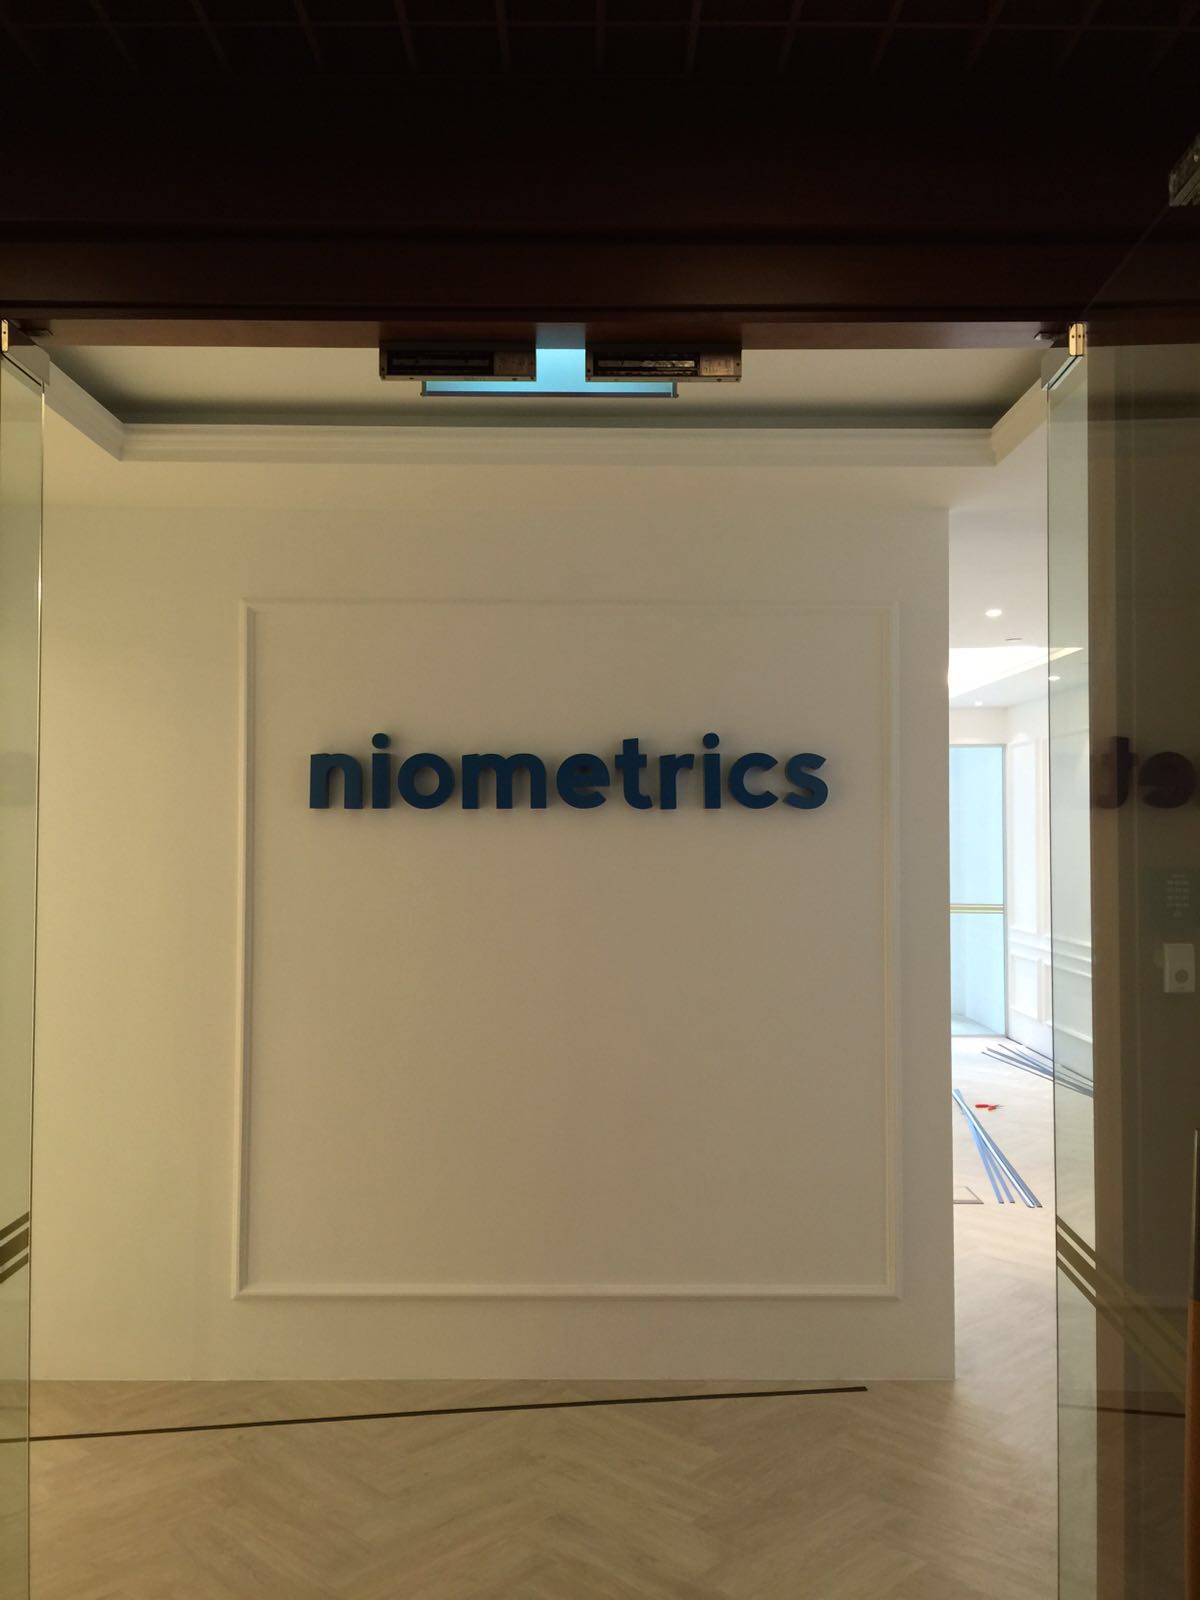 Niometrics